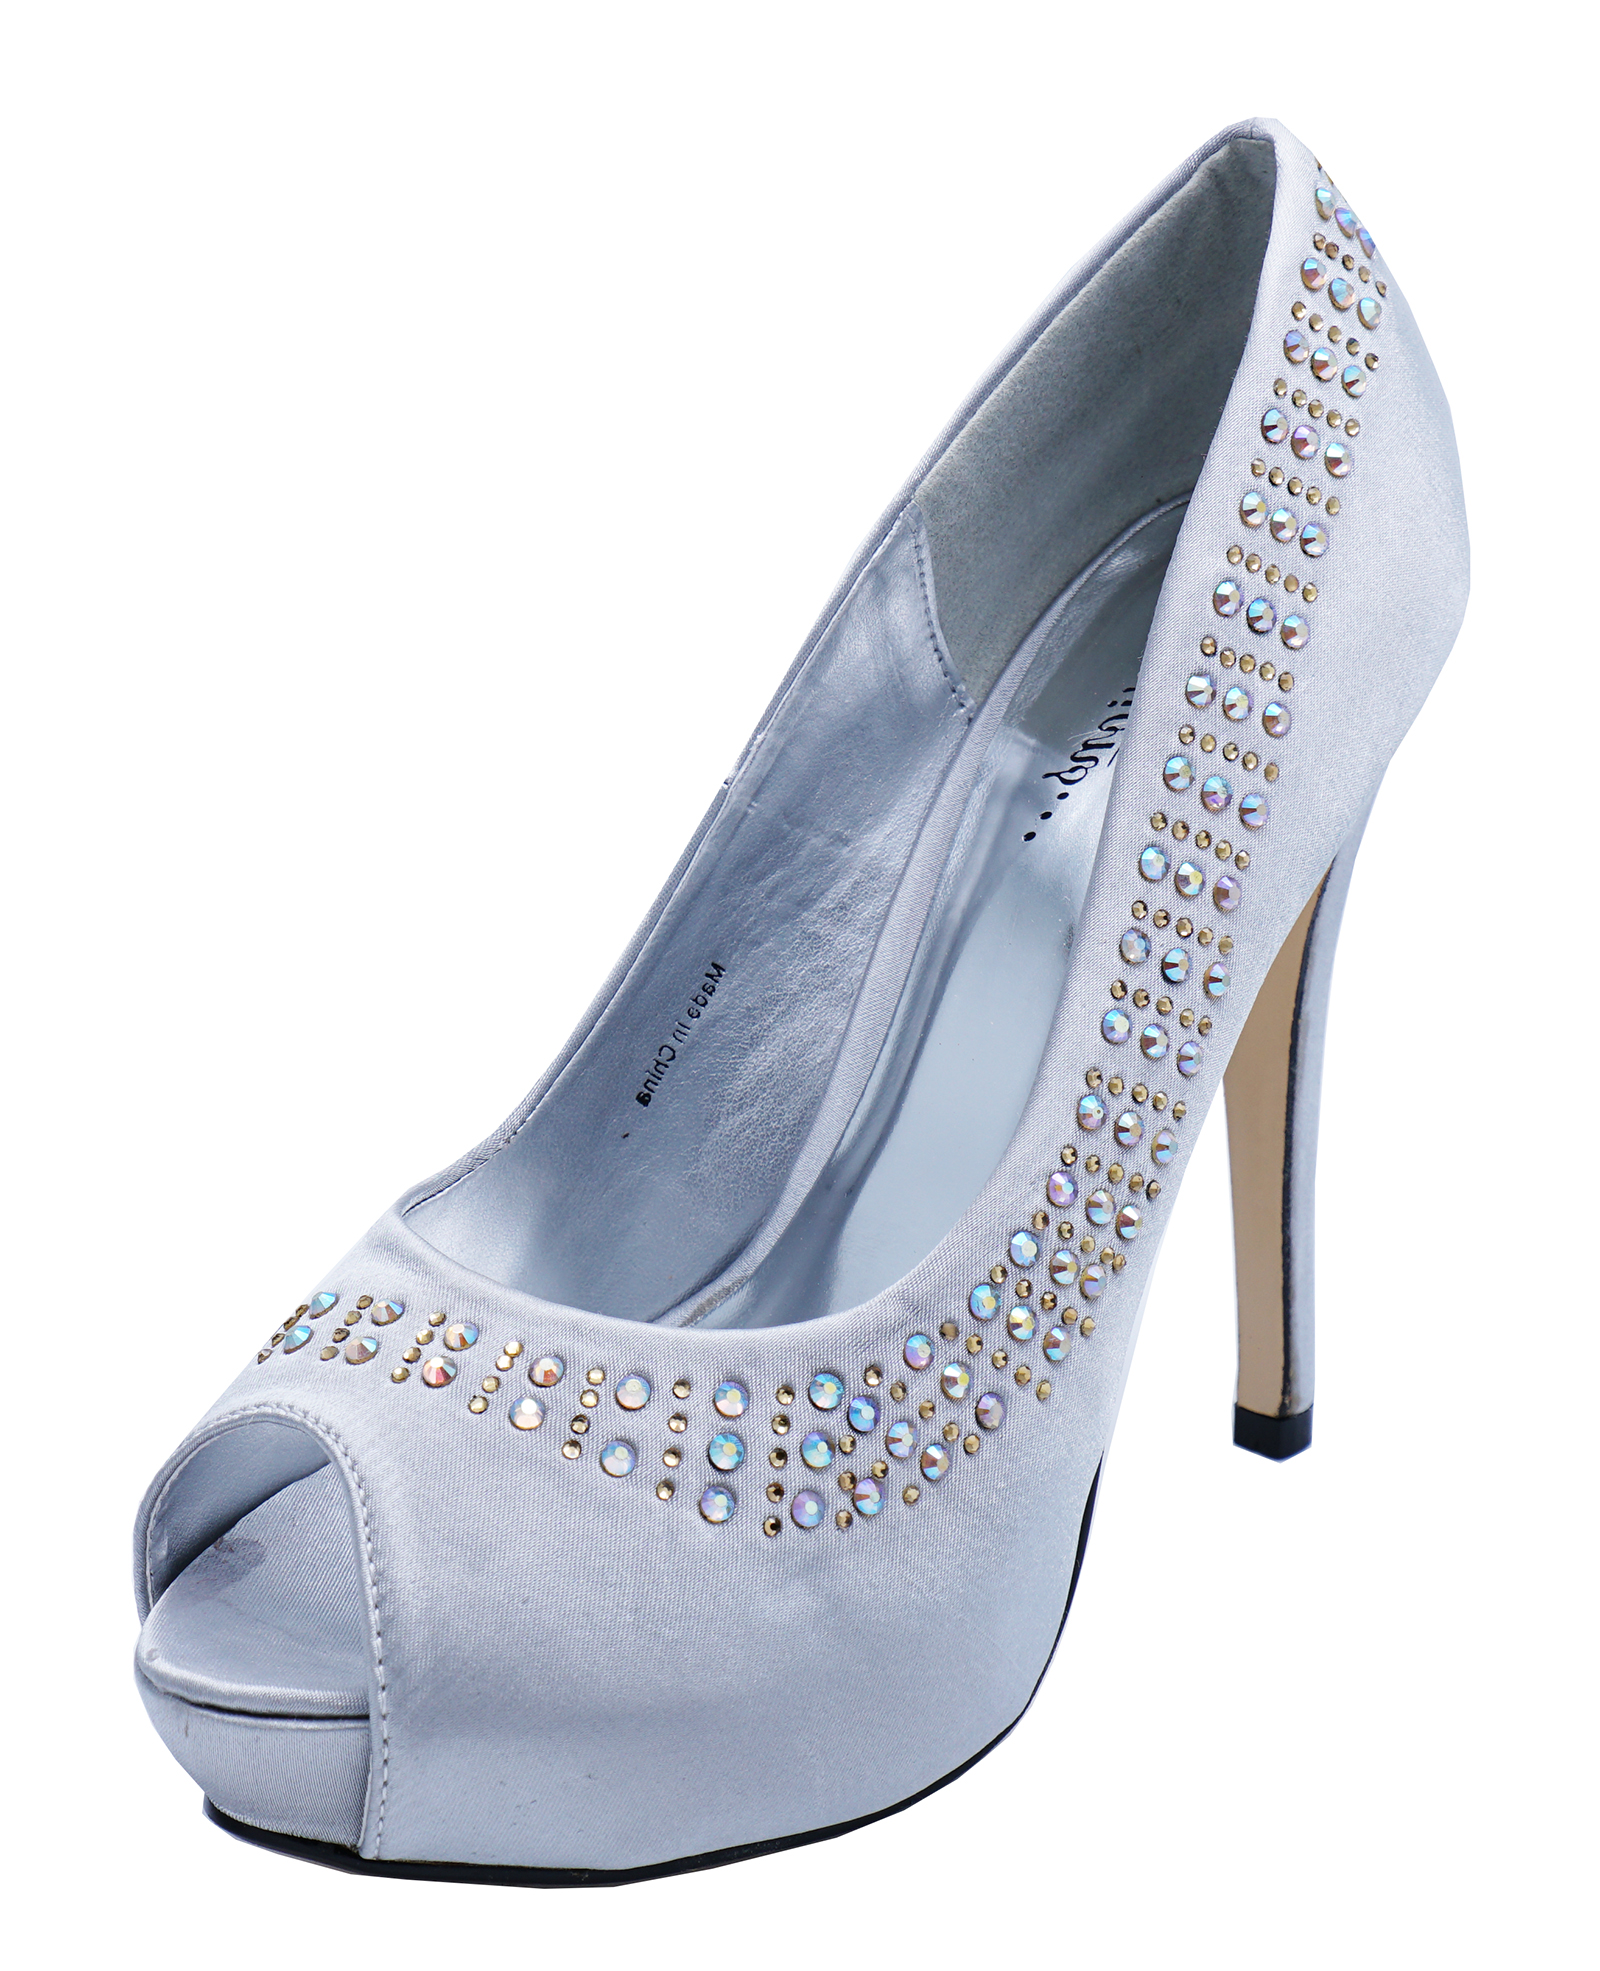 ladies silver shoes size 8